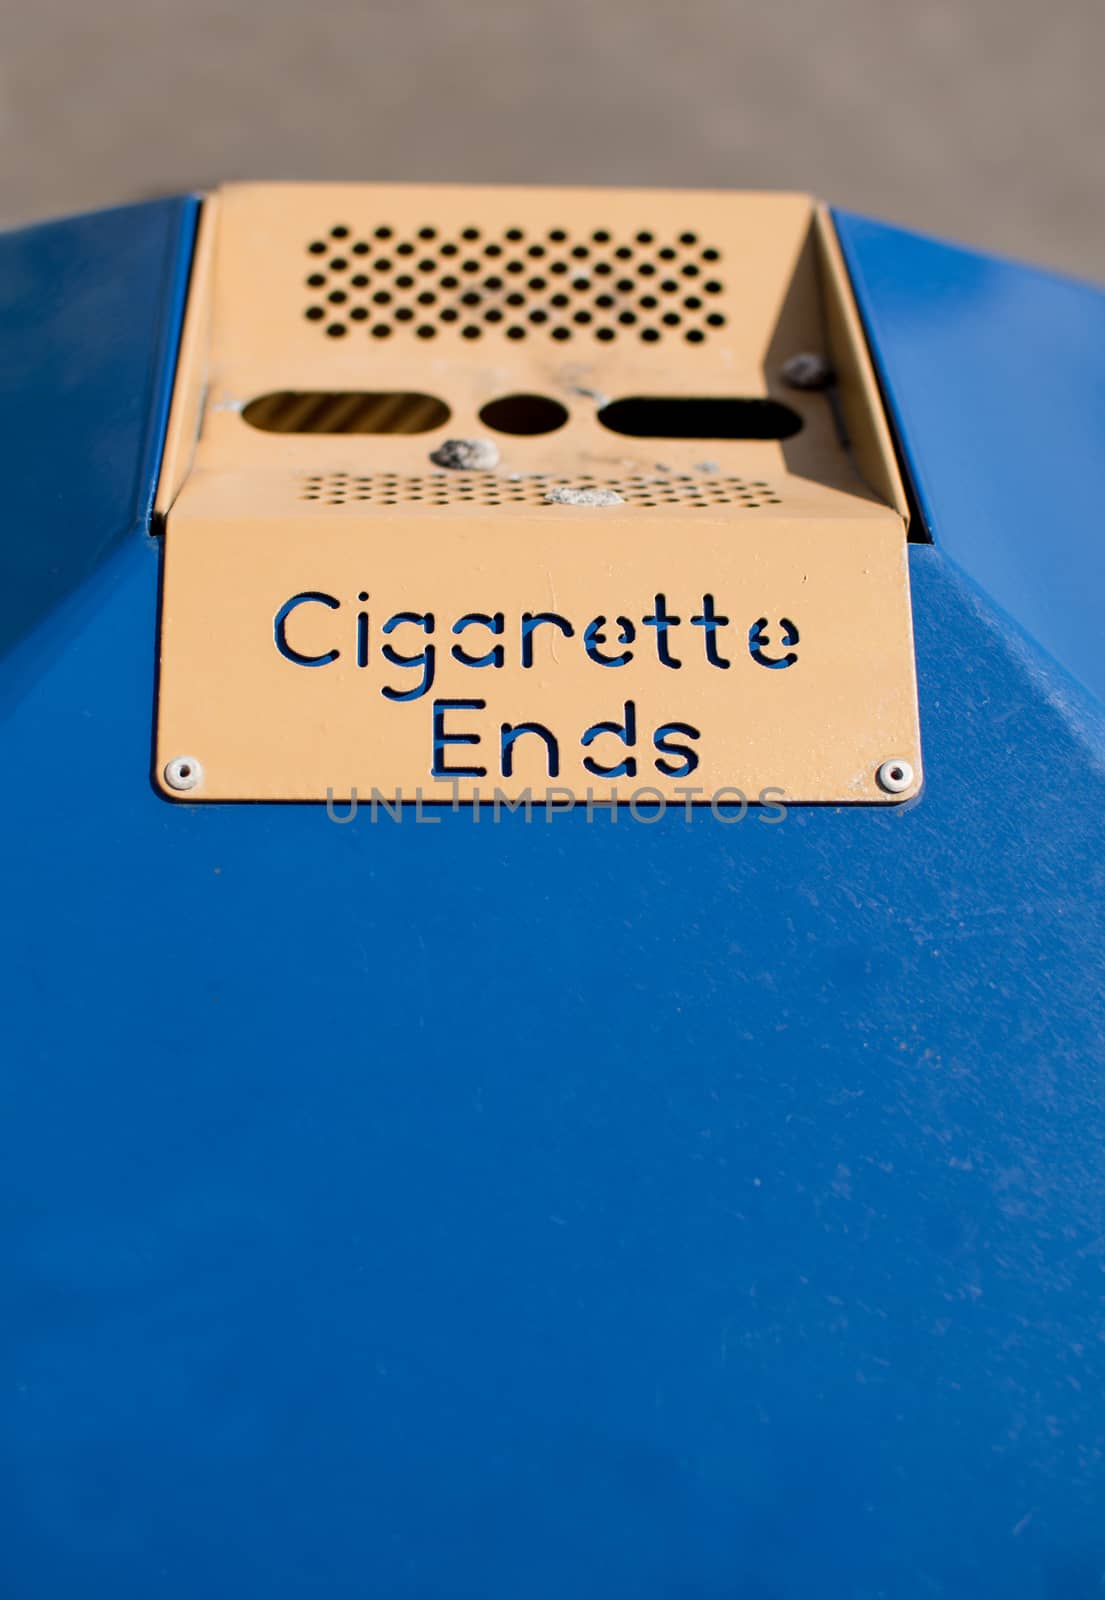 Public Ashtray - Cigarette Ends by gary_parker